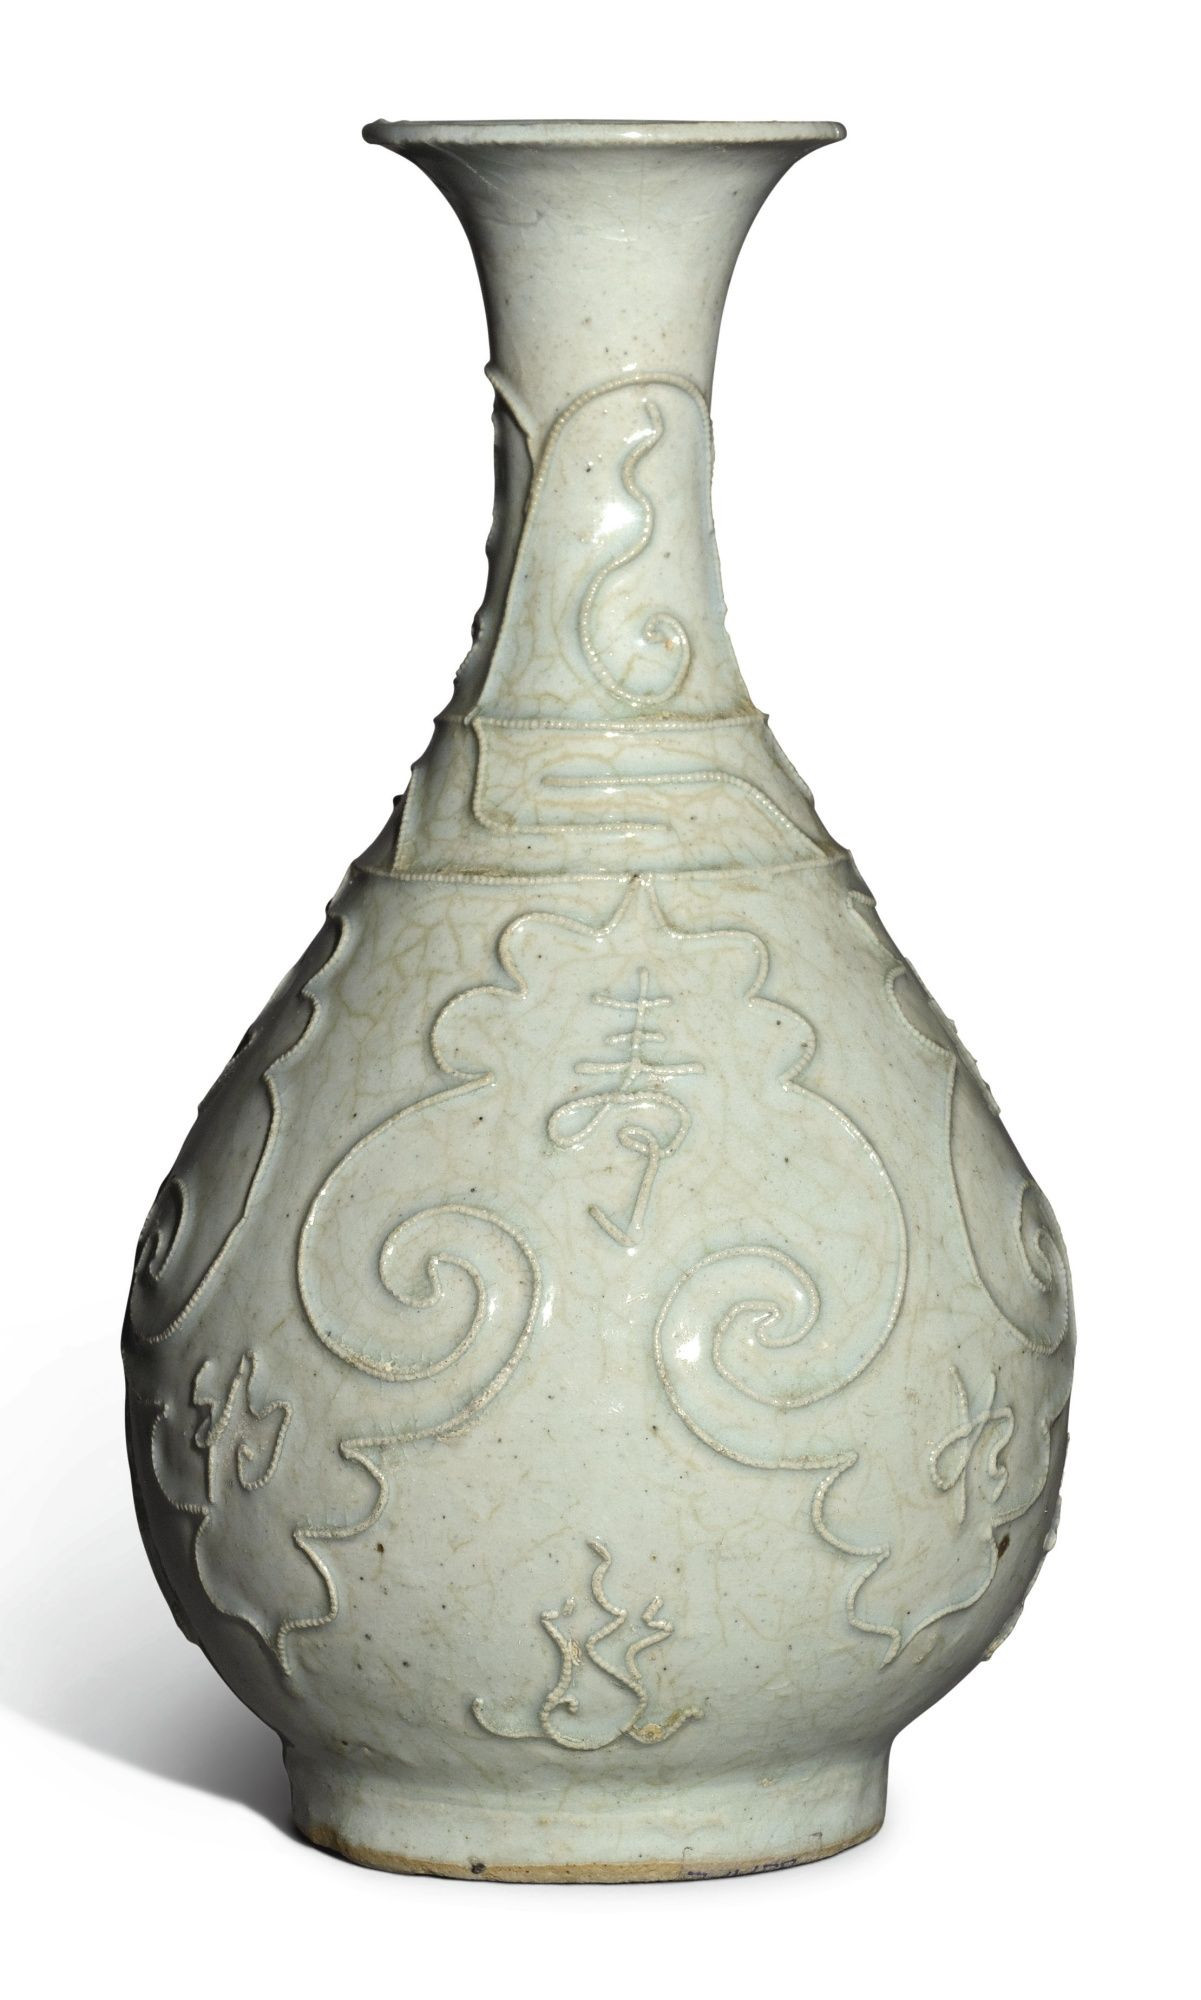 29 Perfect Goryeo Celadon Vase 2024 free download goryeo celadon vase of a rare qingbai vase yuan dynasty ceramica pottery porcelain inside a rare qingbai vase yuan dynasty